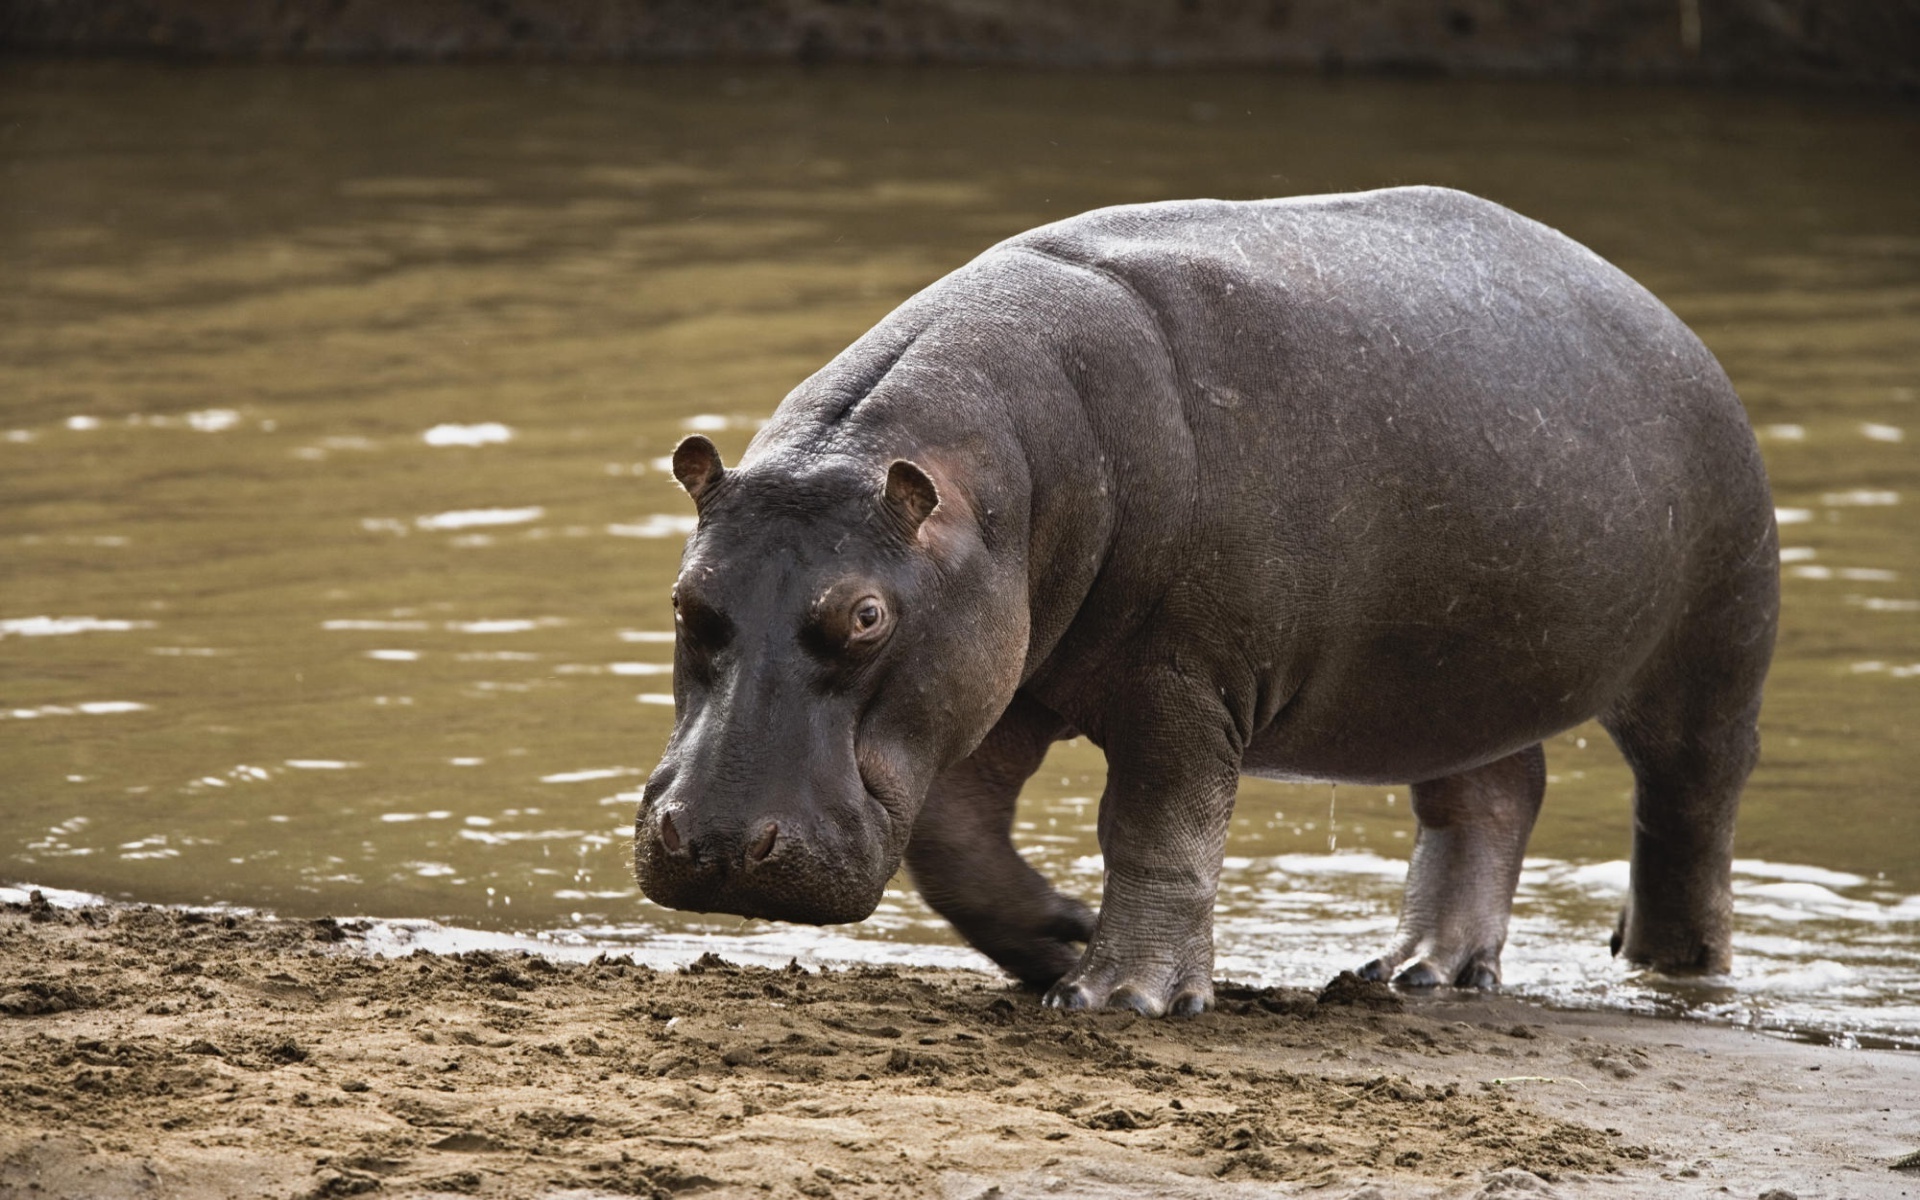 Hippopotamus HD desktop wallpaper, High-quality image, Stunning background, Wildlife beauty, 1920x1200 HD Desktop